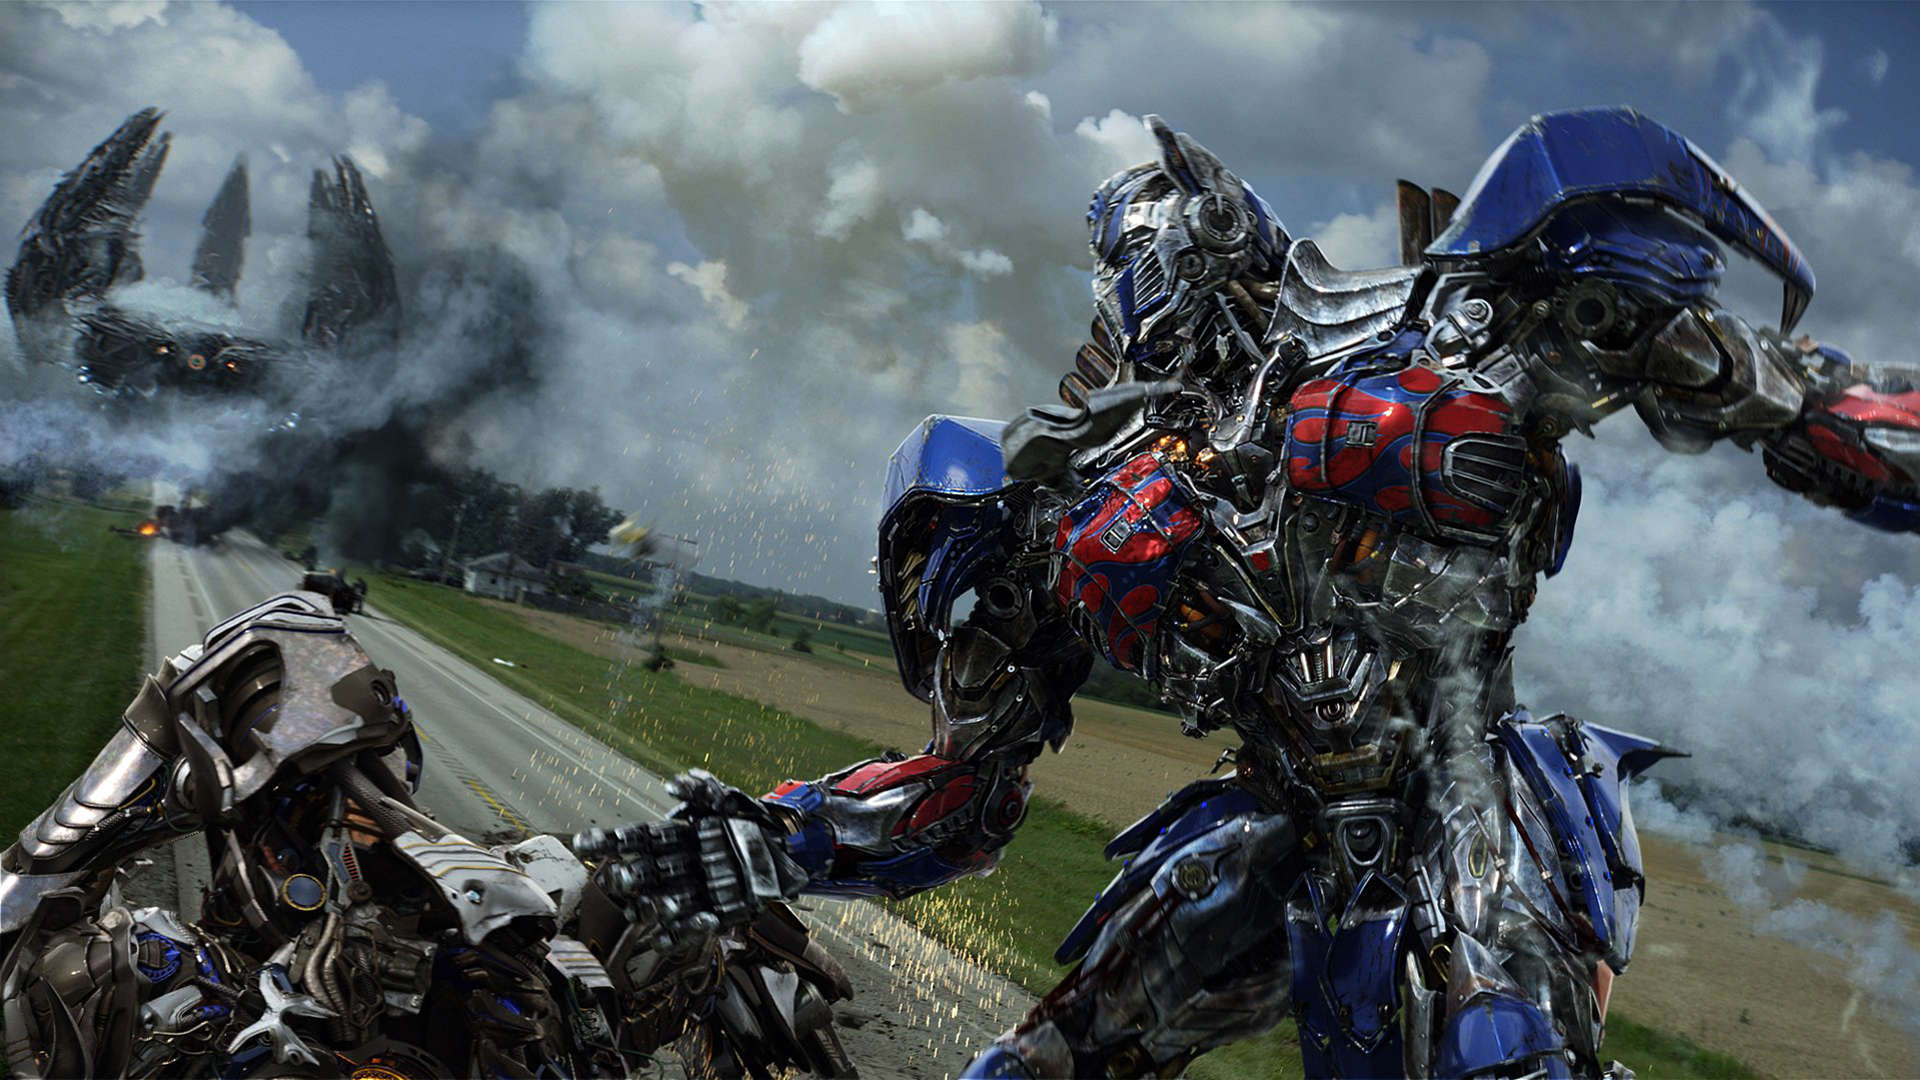 Wallpaper Transformers HD 1080p Upload At May By